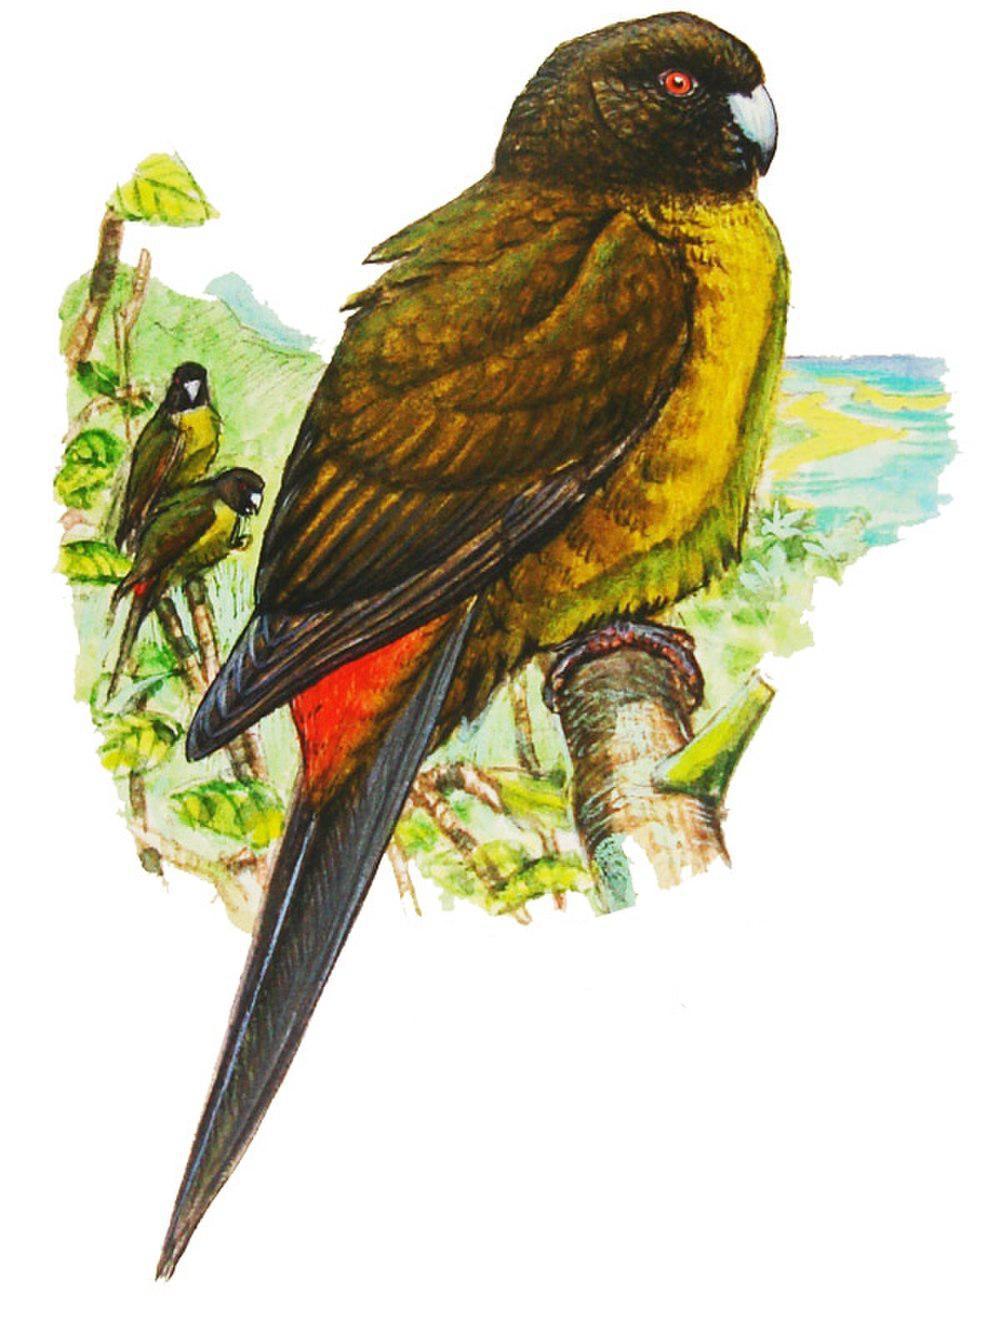 社会岛鹦鹉 / Raiatea Parakeet / Cyanoramphus ulietanus